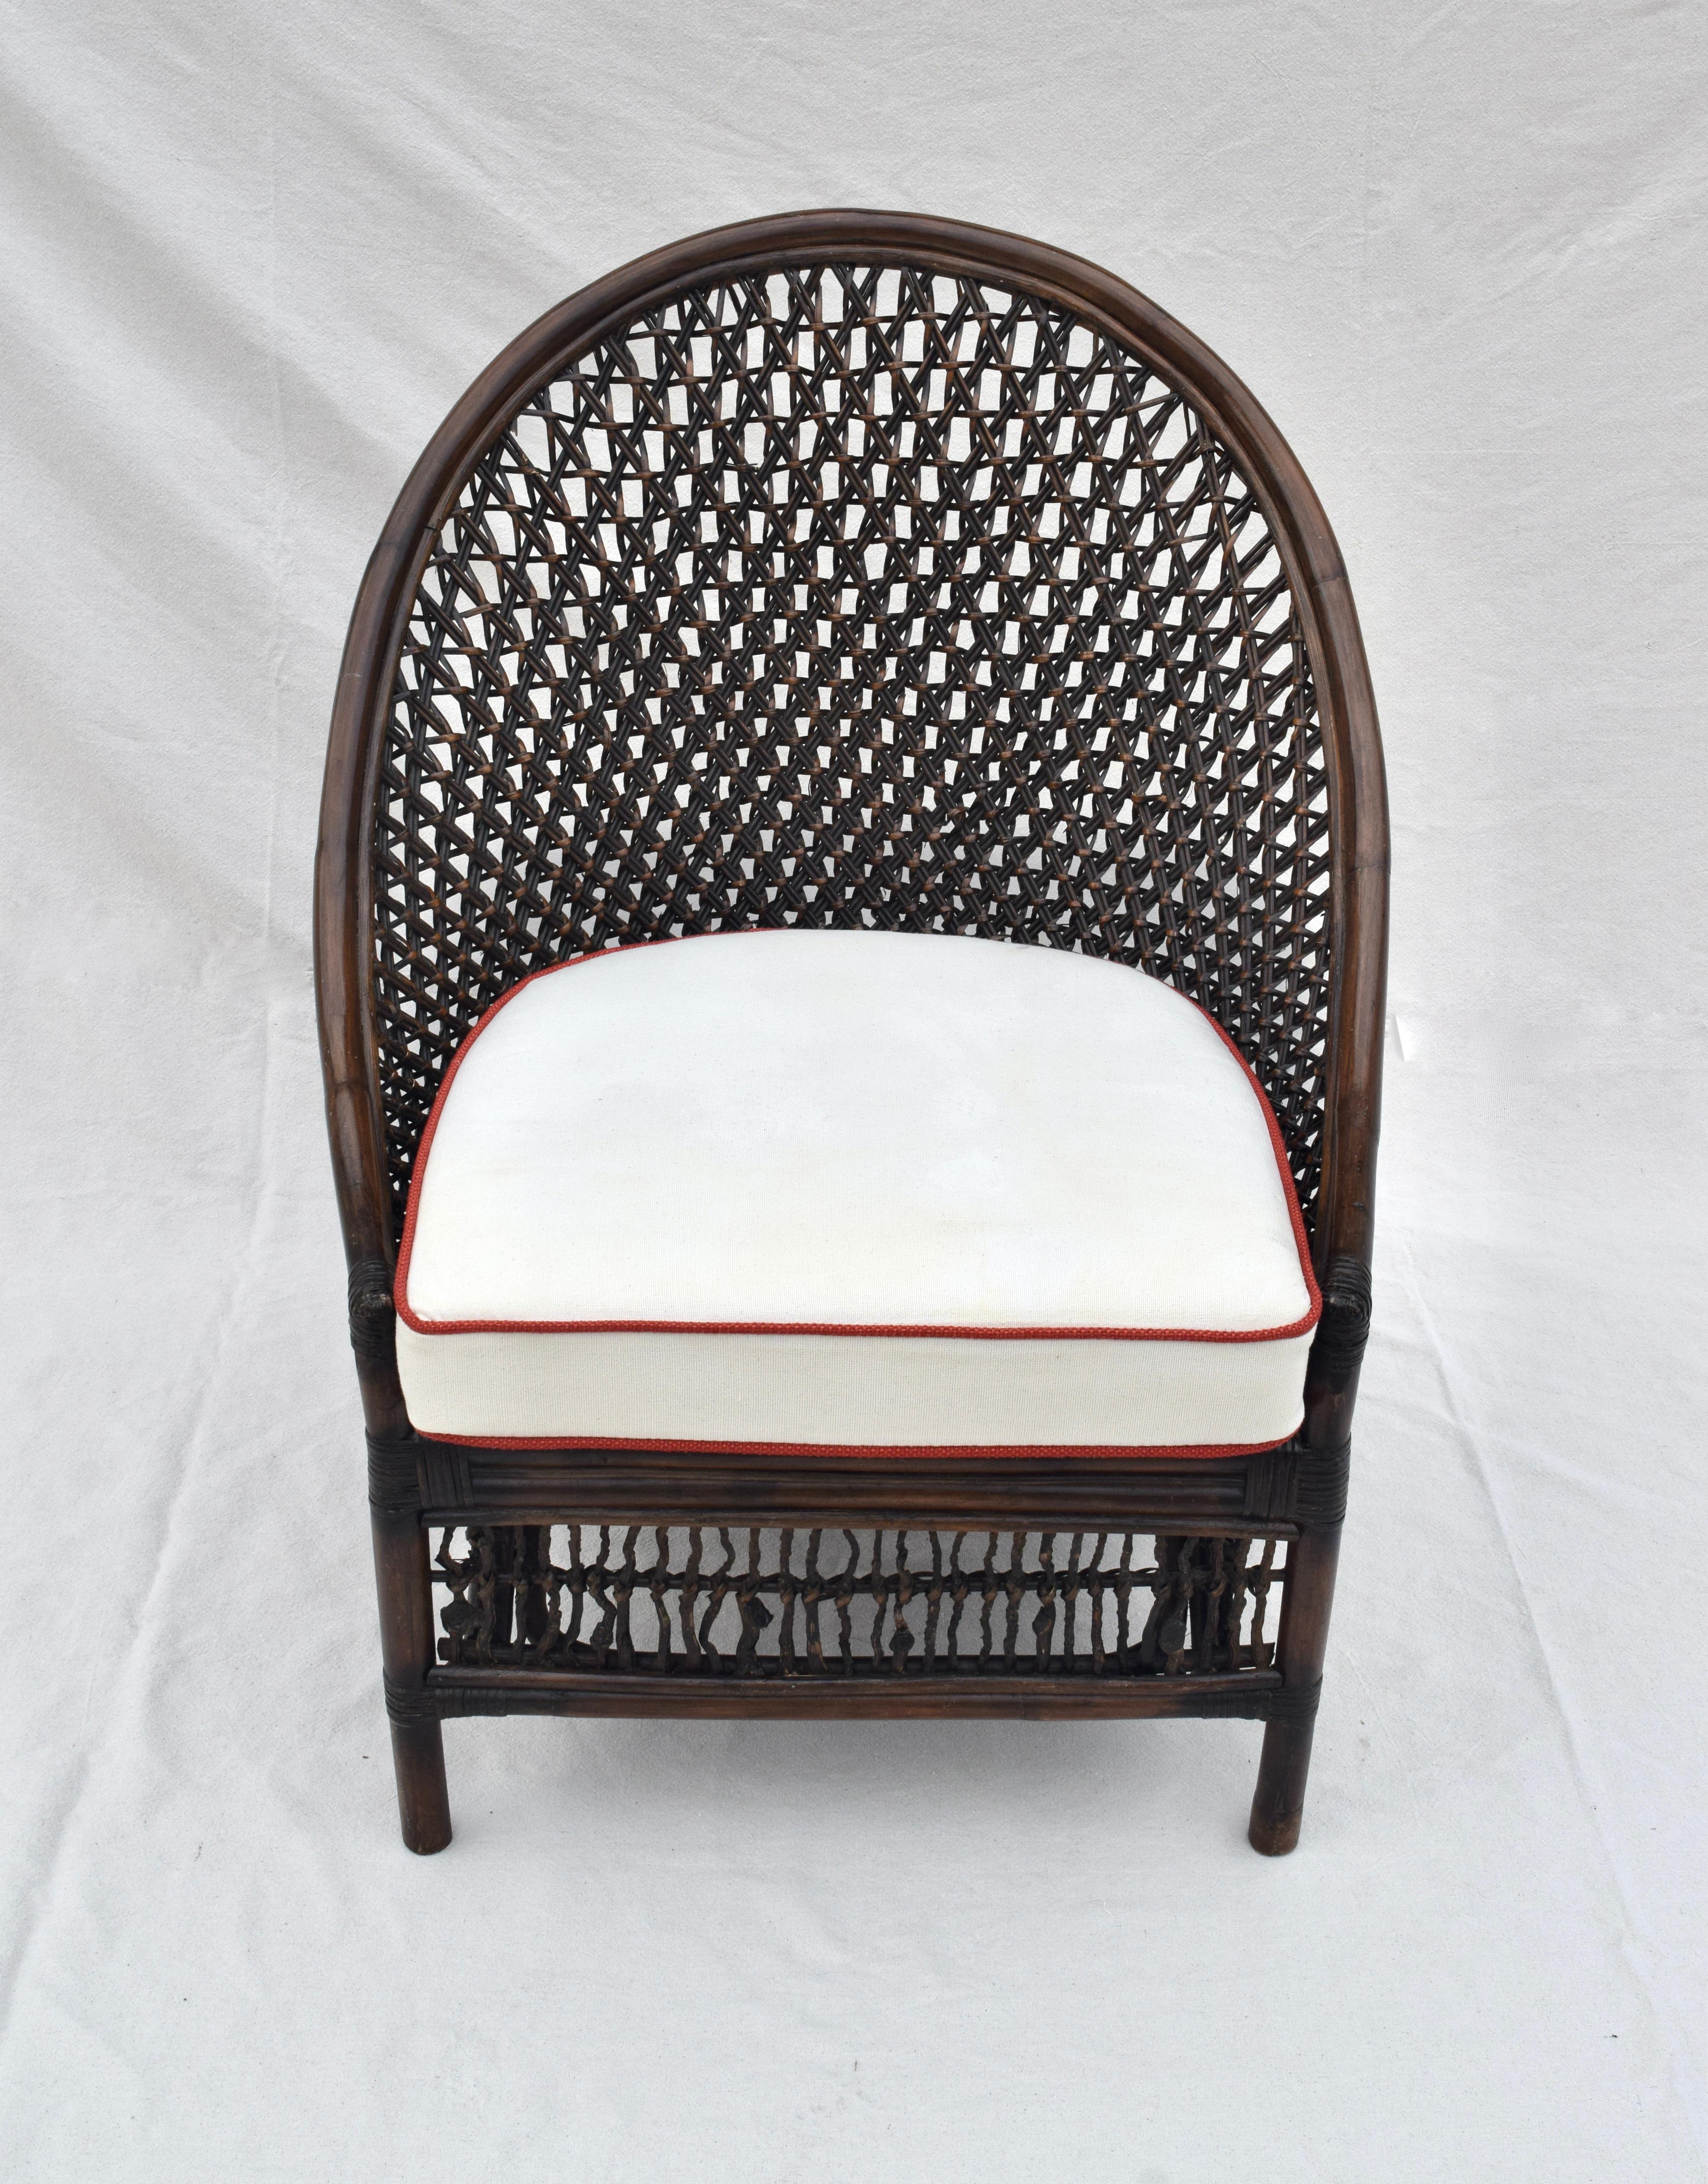 palecek wicker chair rattan furniture -china -b2b -forum -blog -wikipedia -.cn -.gov -alibaba